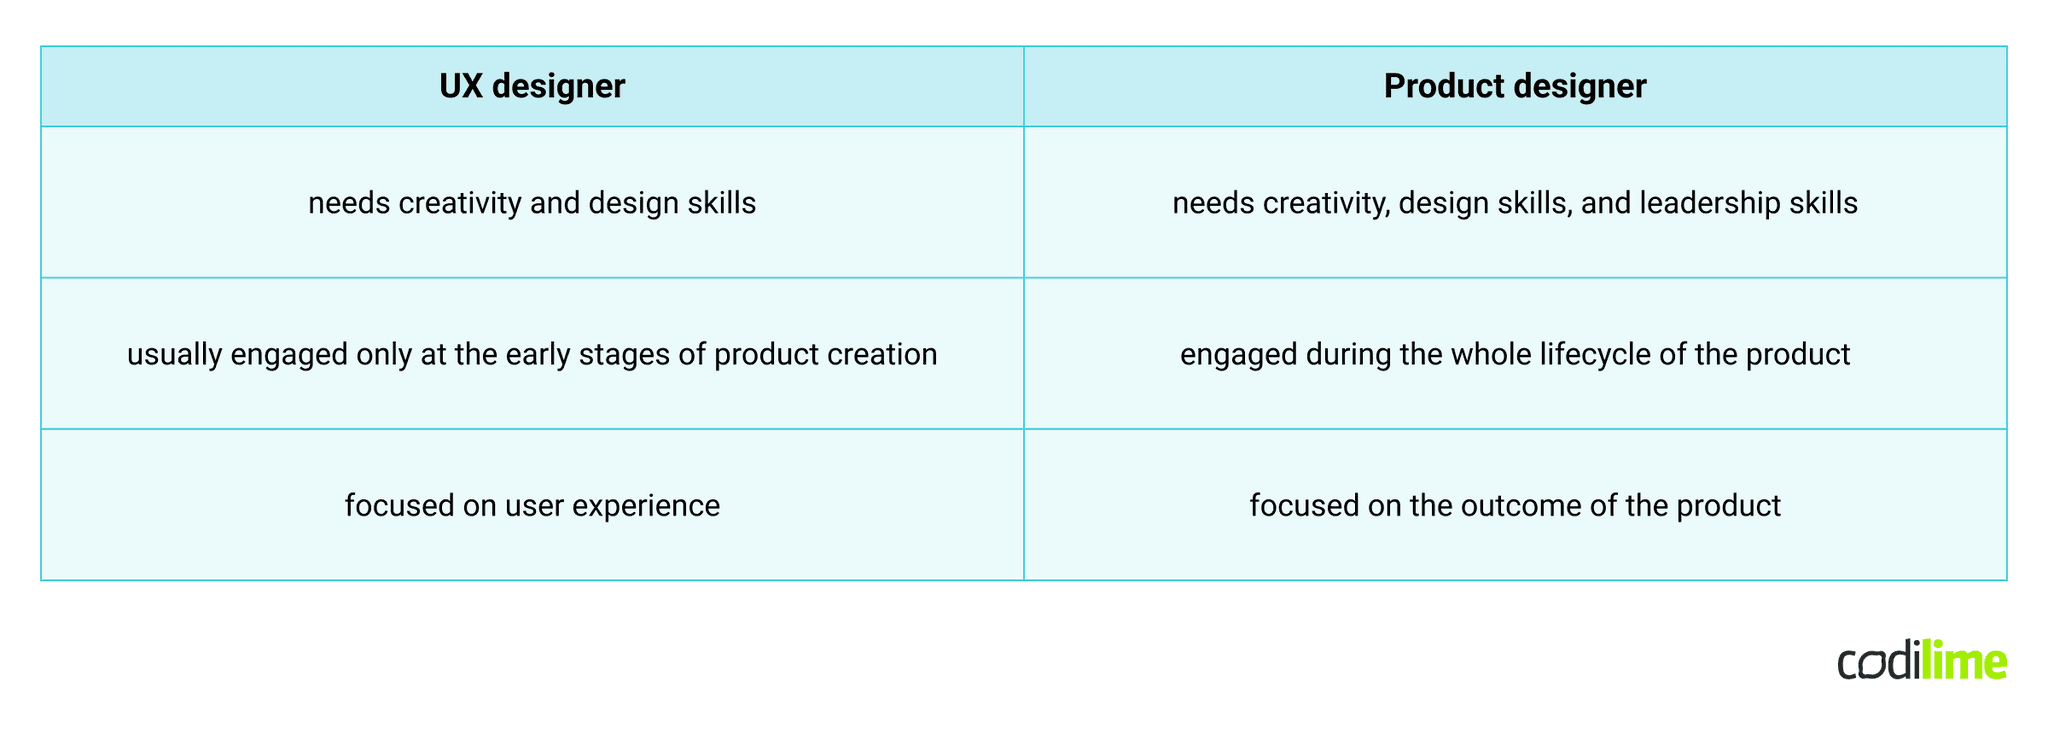 Differences between Product designer vs UX designer